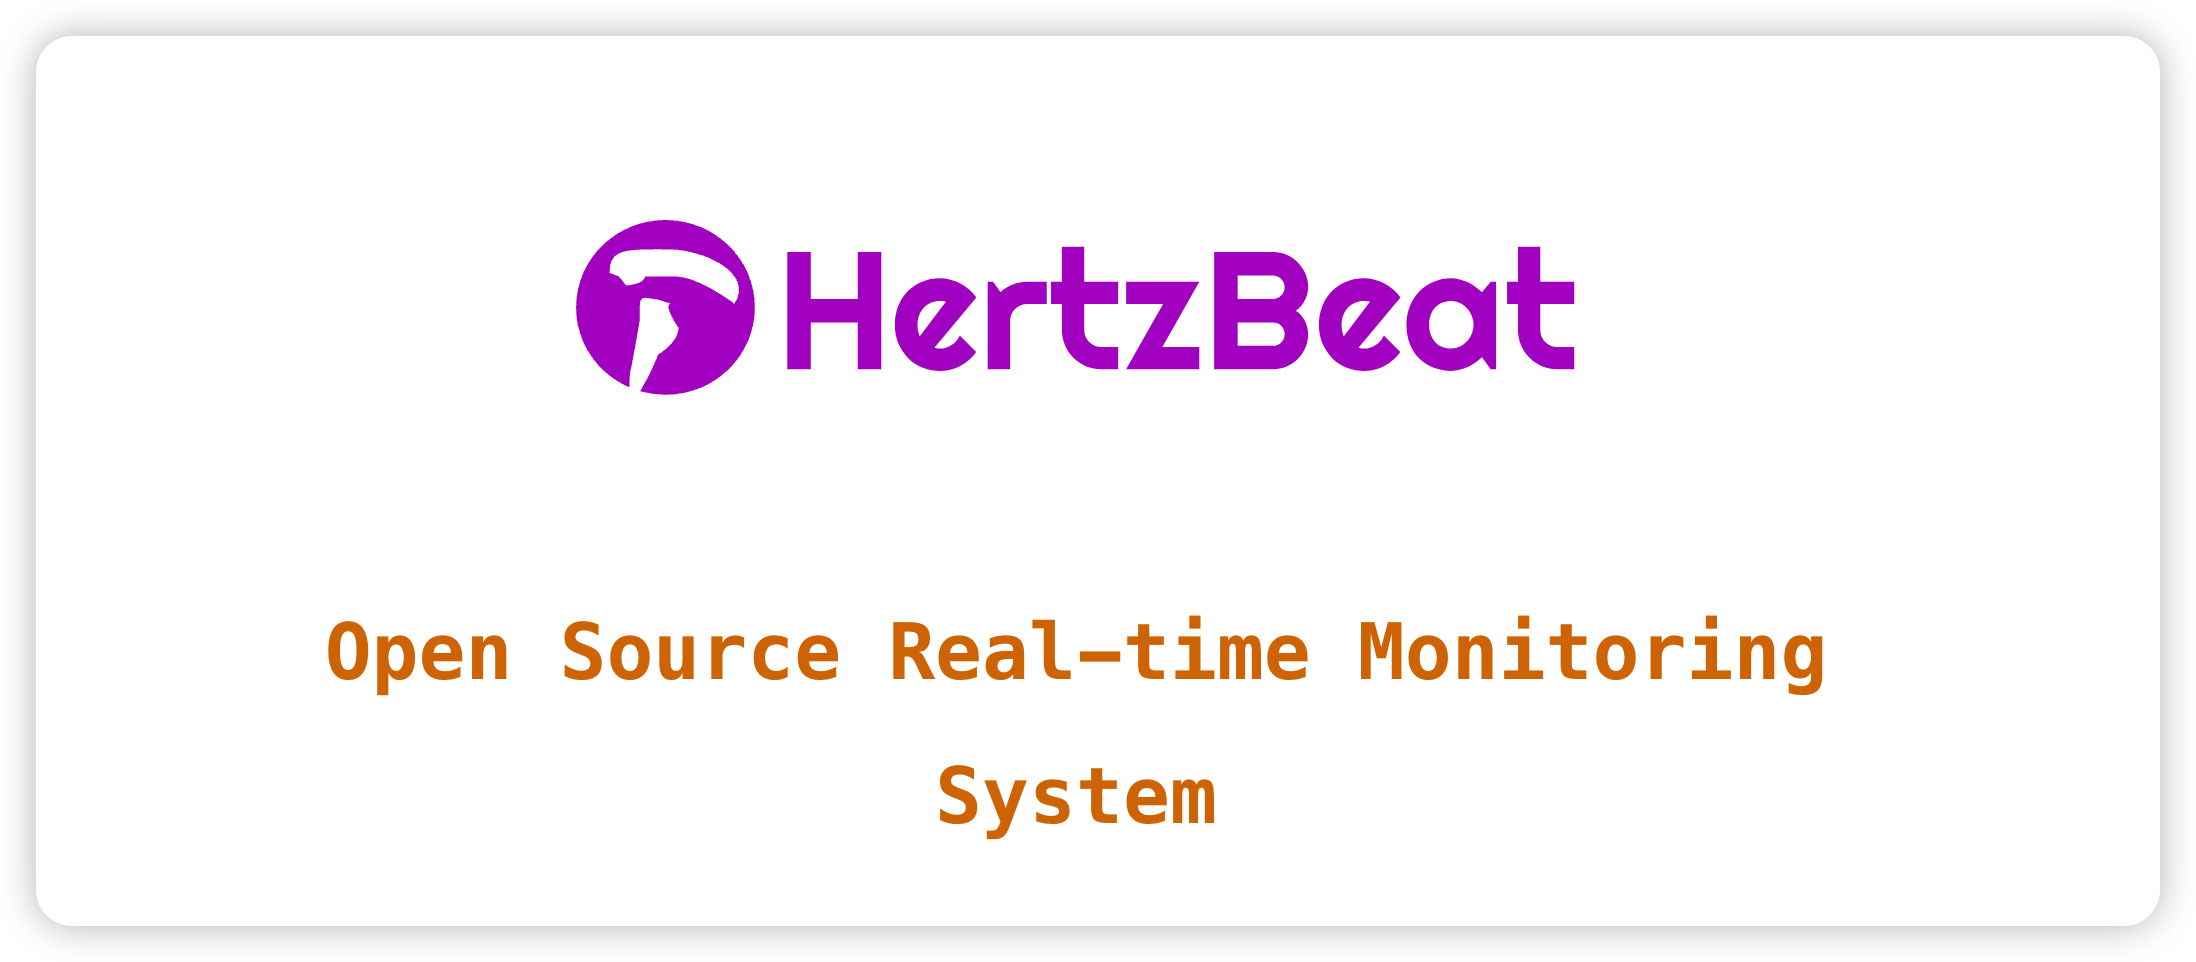 hertzbeat